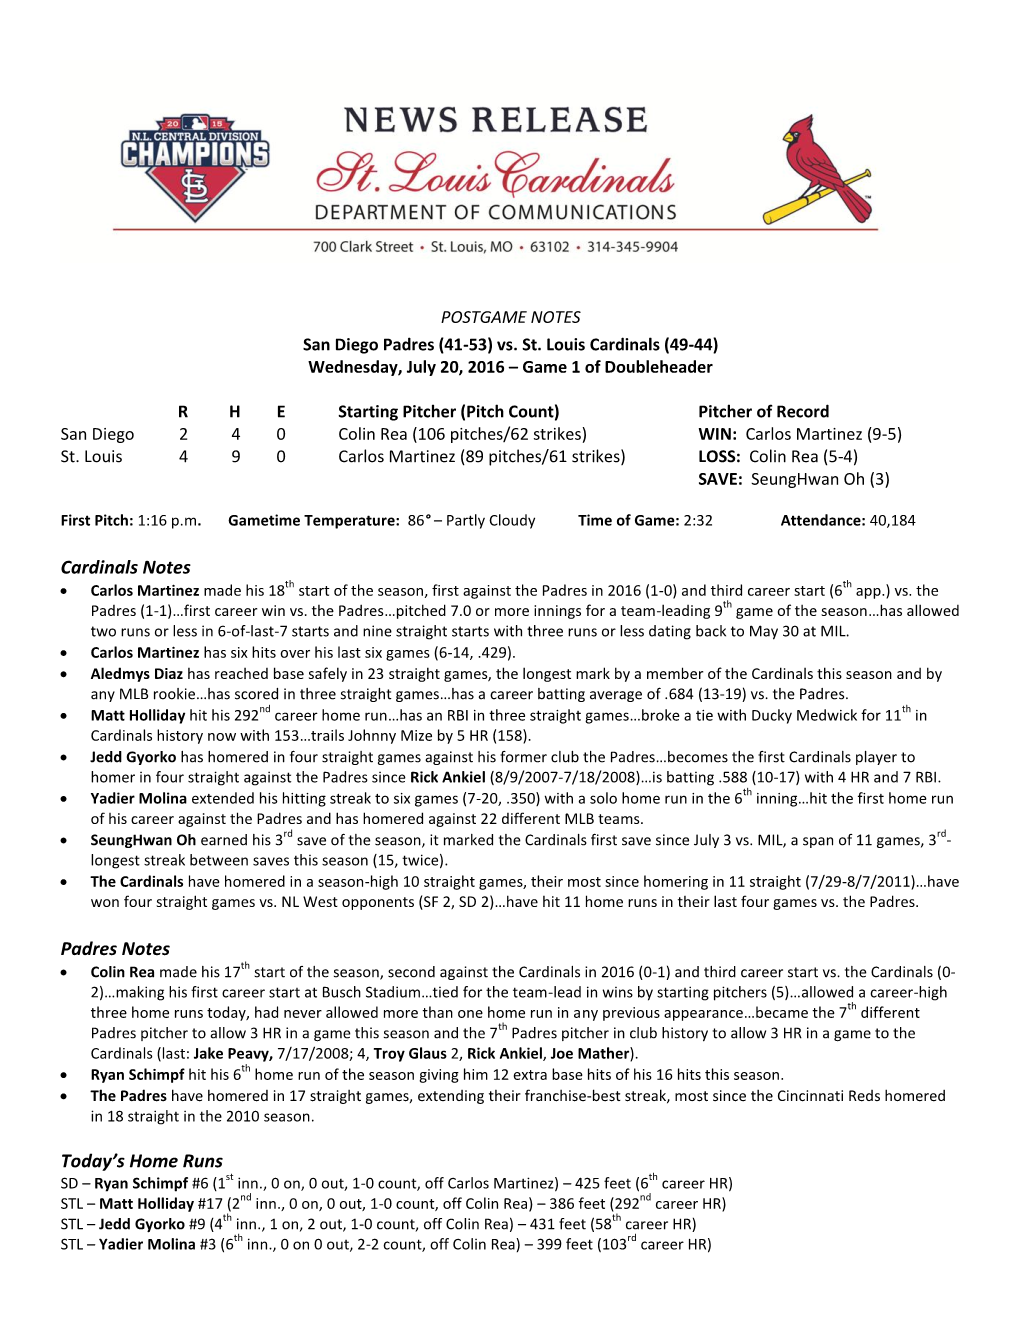 Cardinals Notes Padres Notes Today's Home Runs